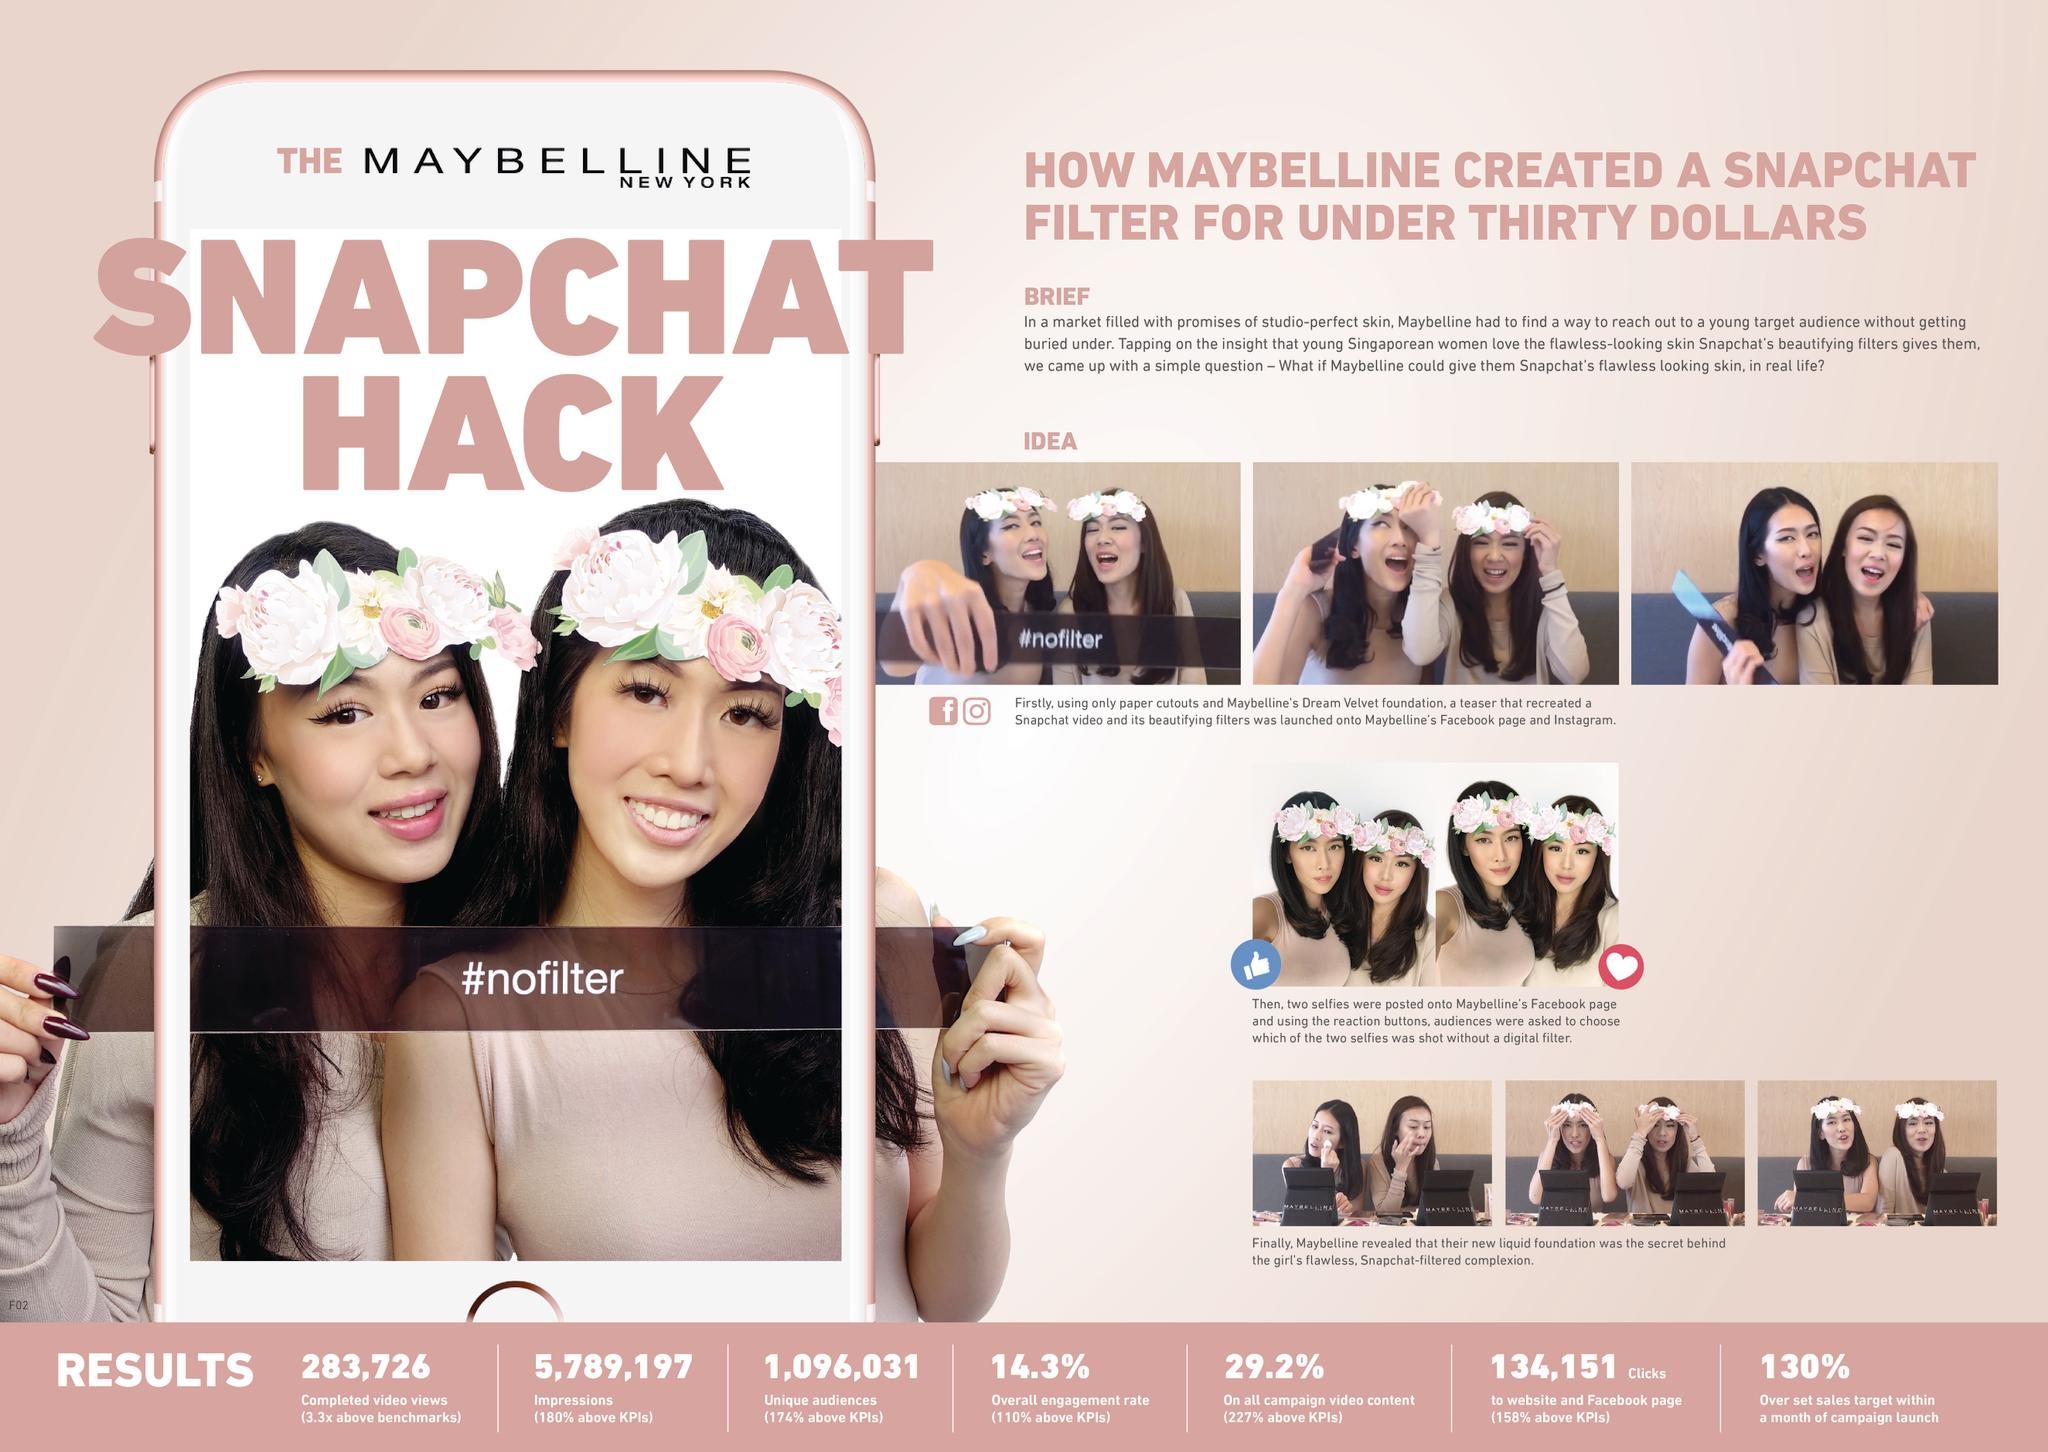 Maybelline's Snapchat Hack